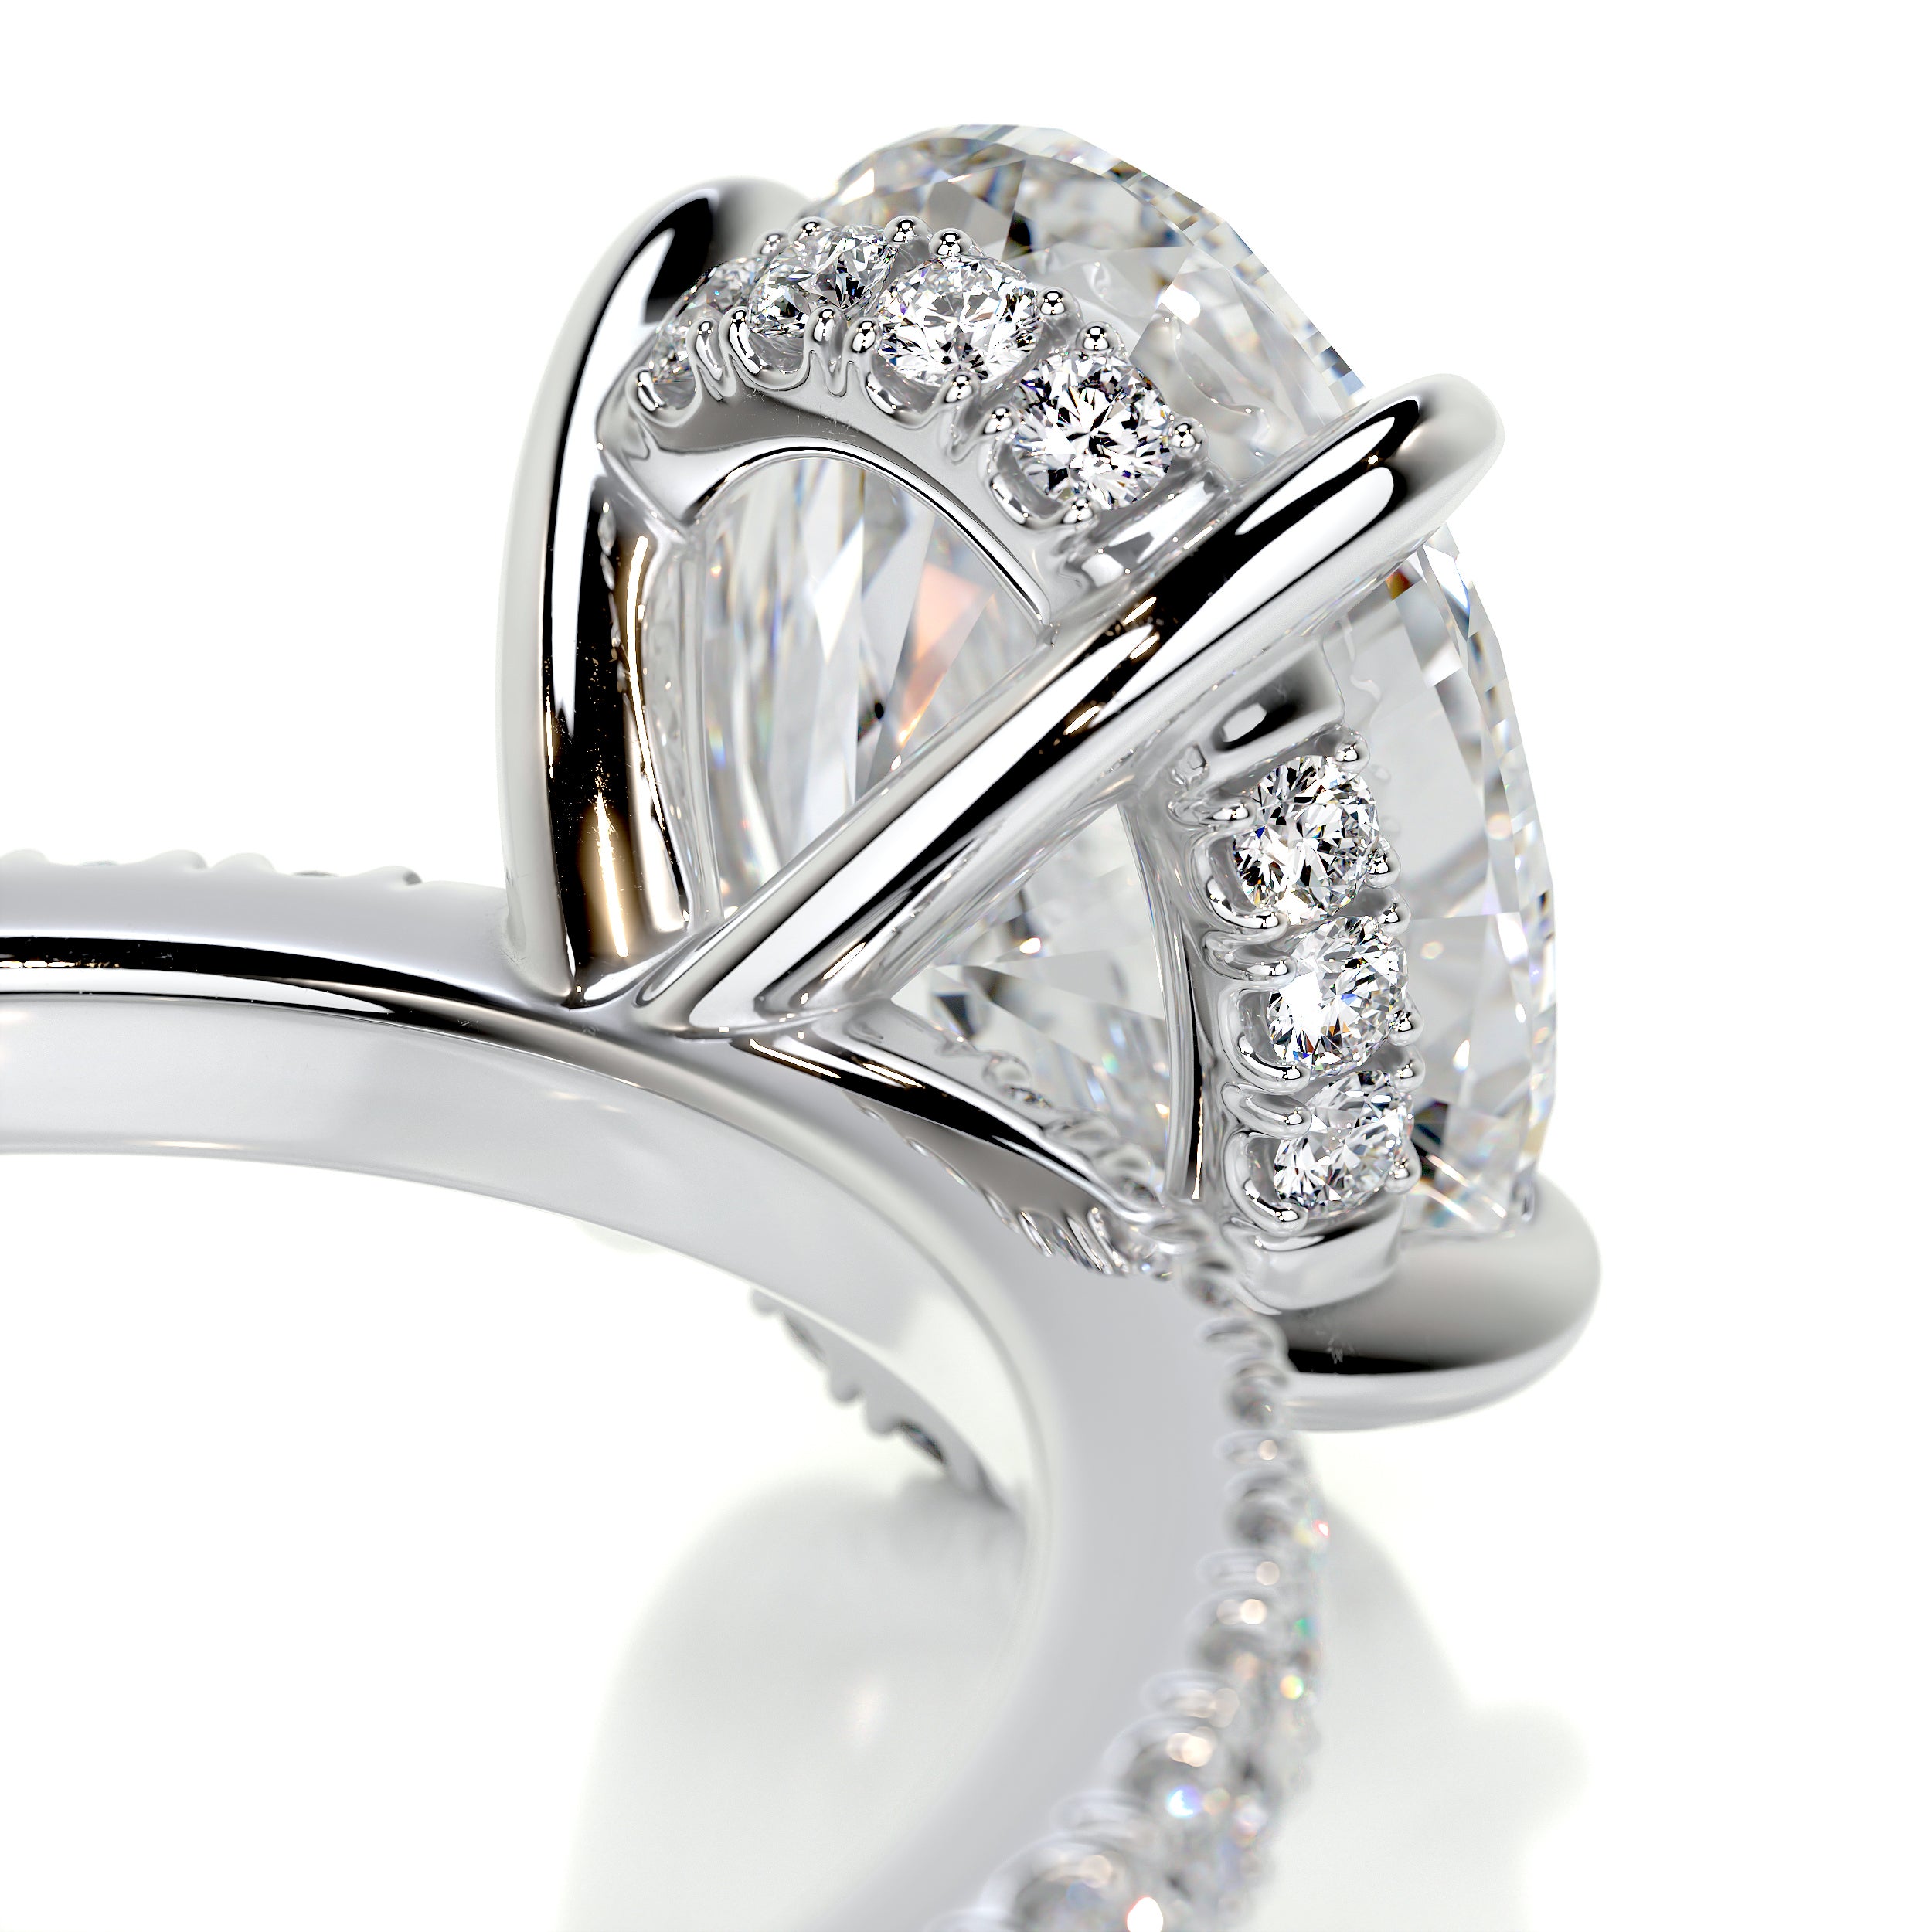 Lucy Diamond Engagement Ring   (2 Carat) -14K White Gold